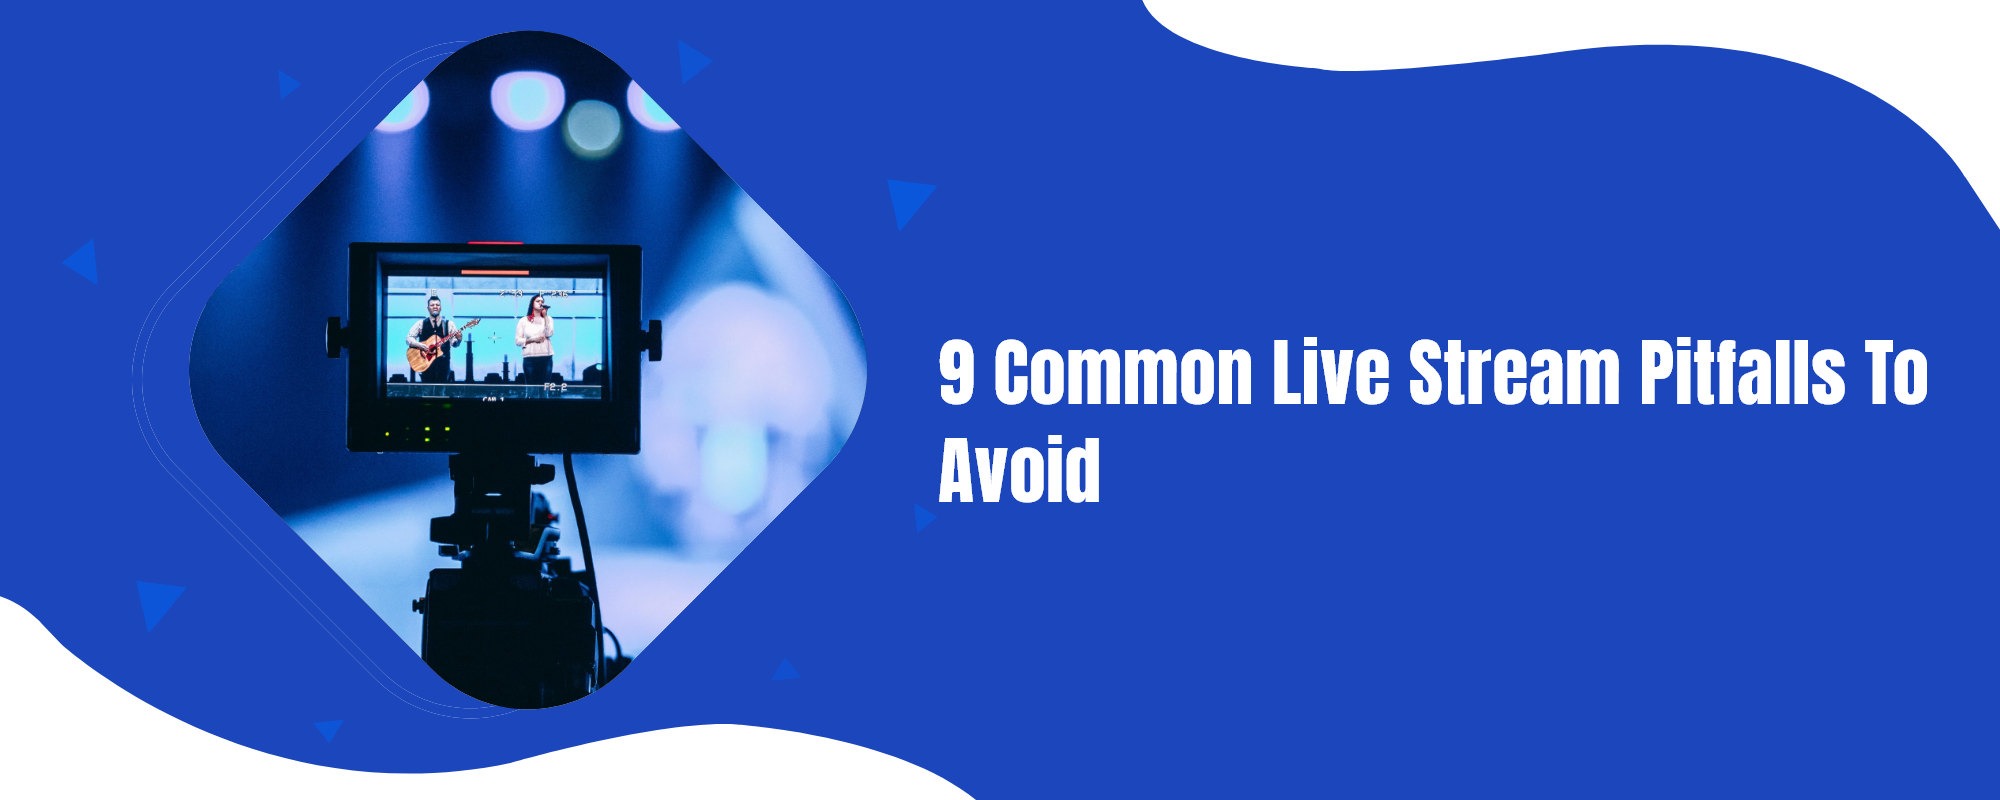 Common live stream pitfalls to avoid